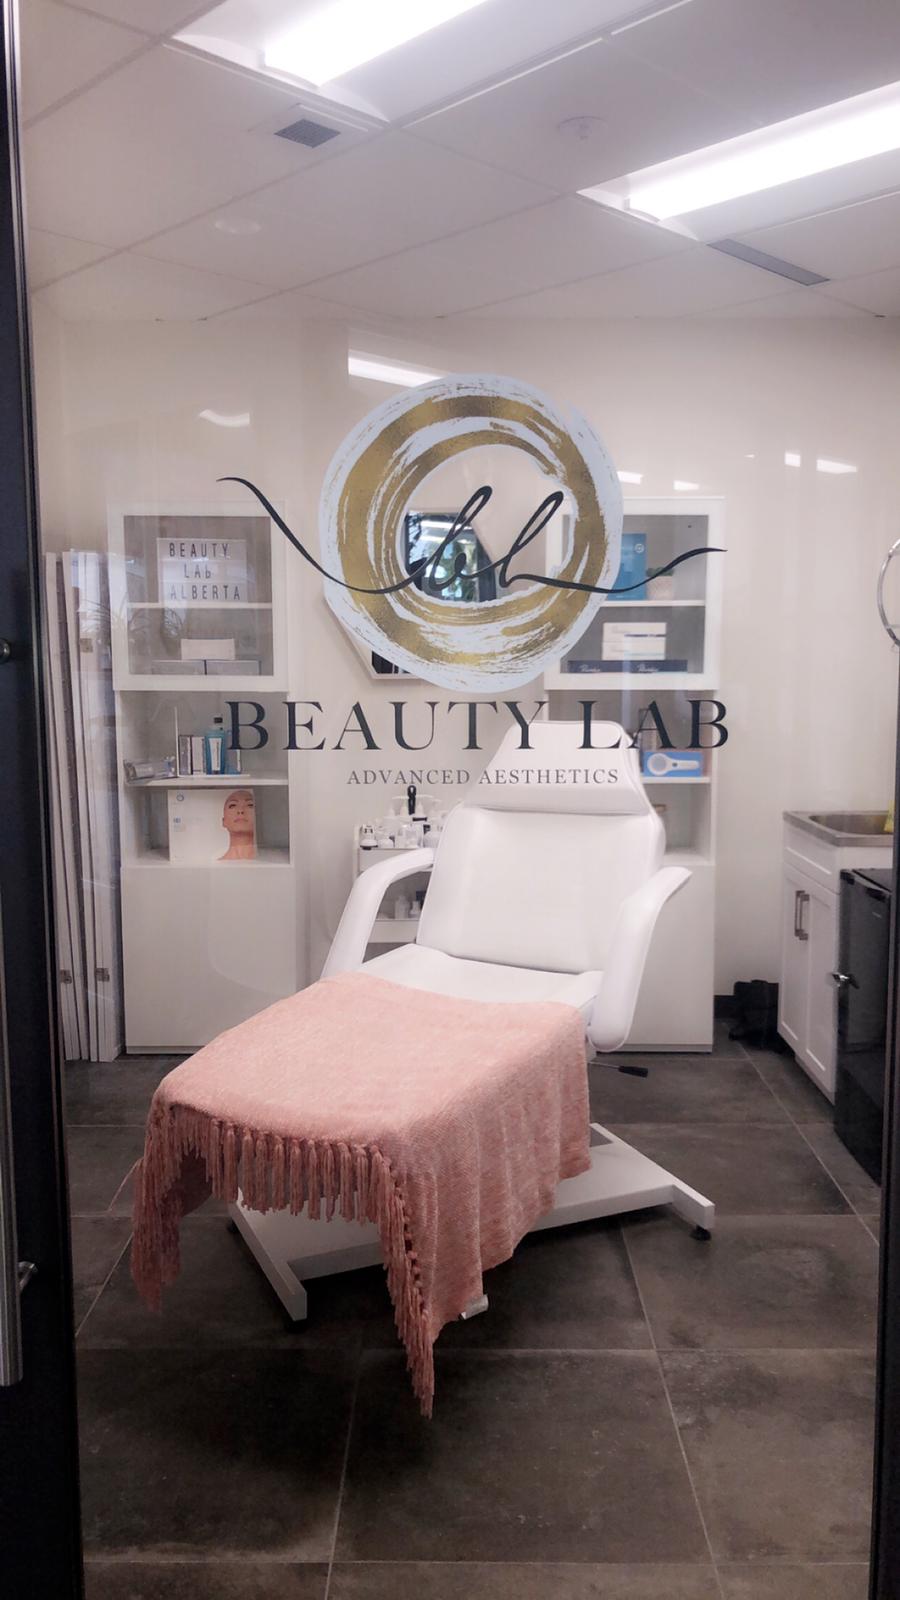 Beauty Lab AB reviews